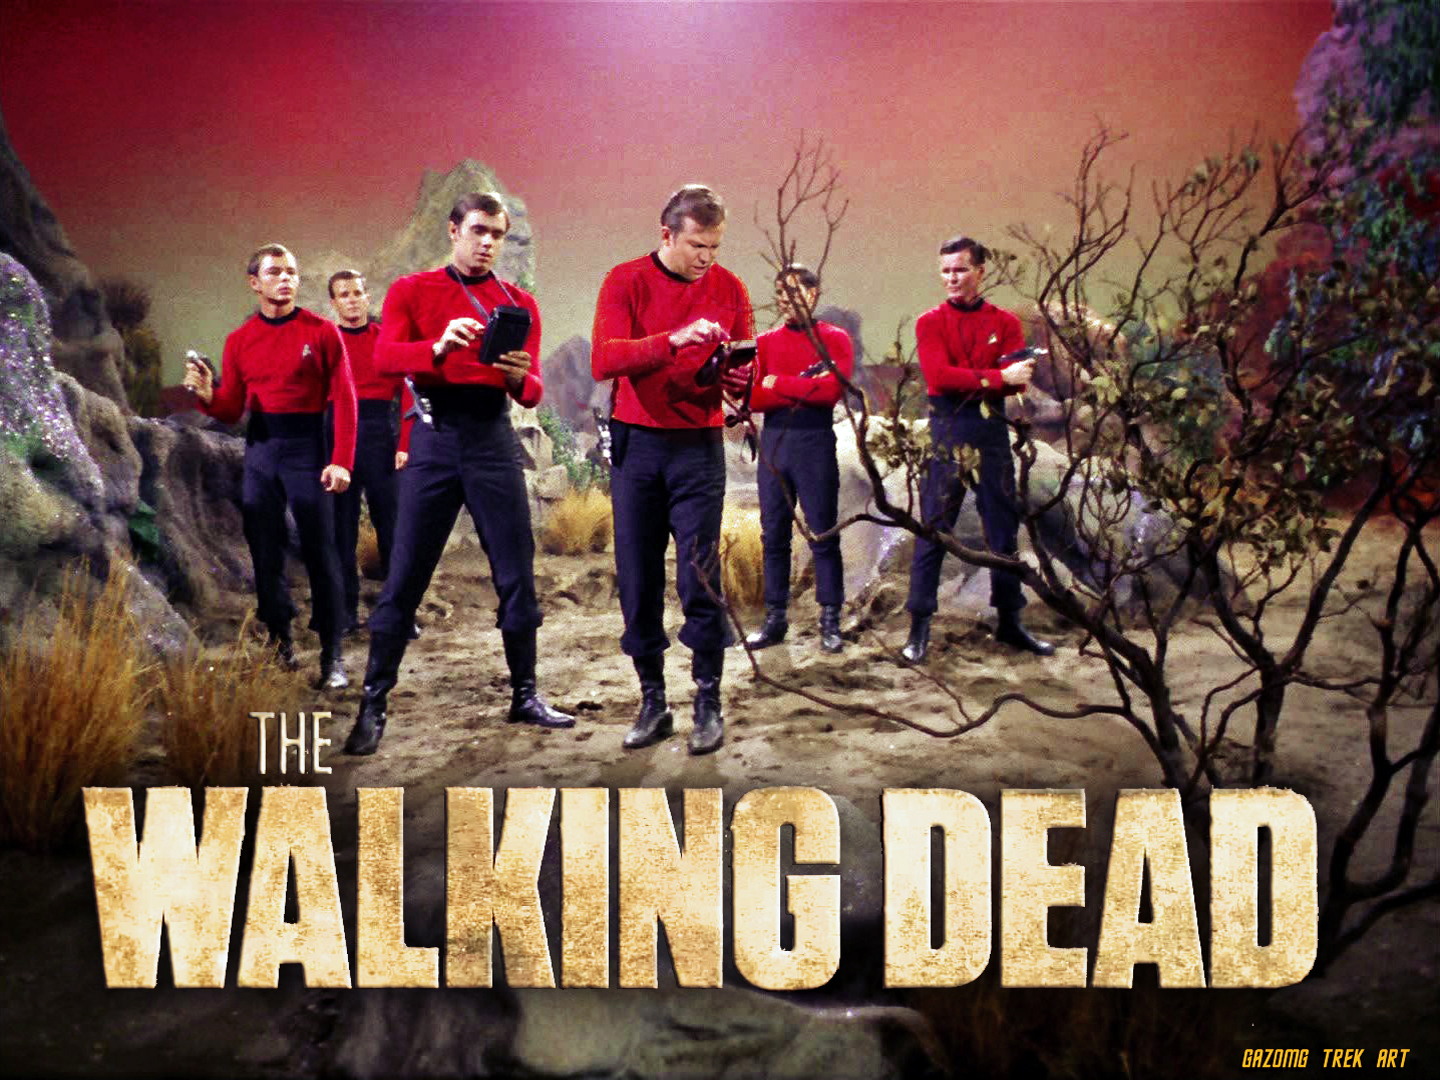 http://orig14.deviantart.net/172f/f/2014/261/6/3/star_trek_redshirt__6____the_walking_dead_by_gazomg-d7zmqwx.jpg